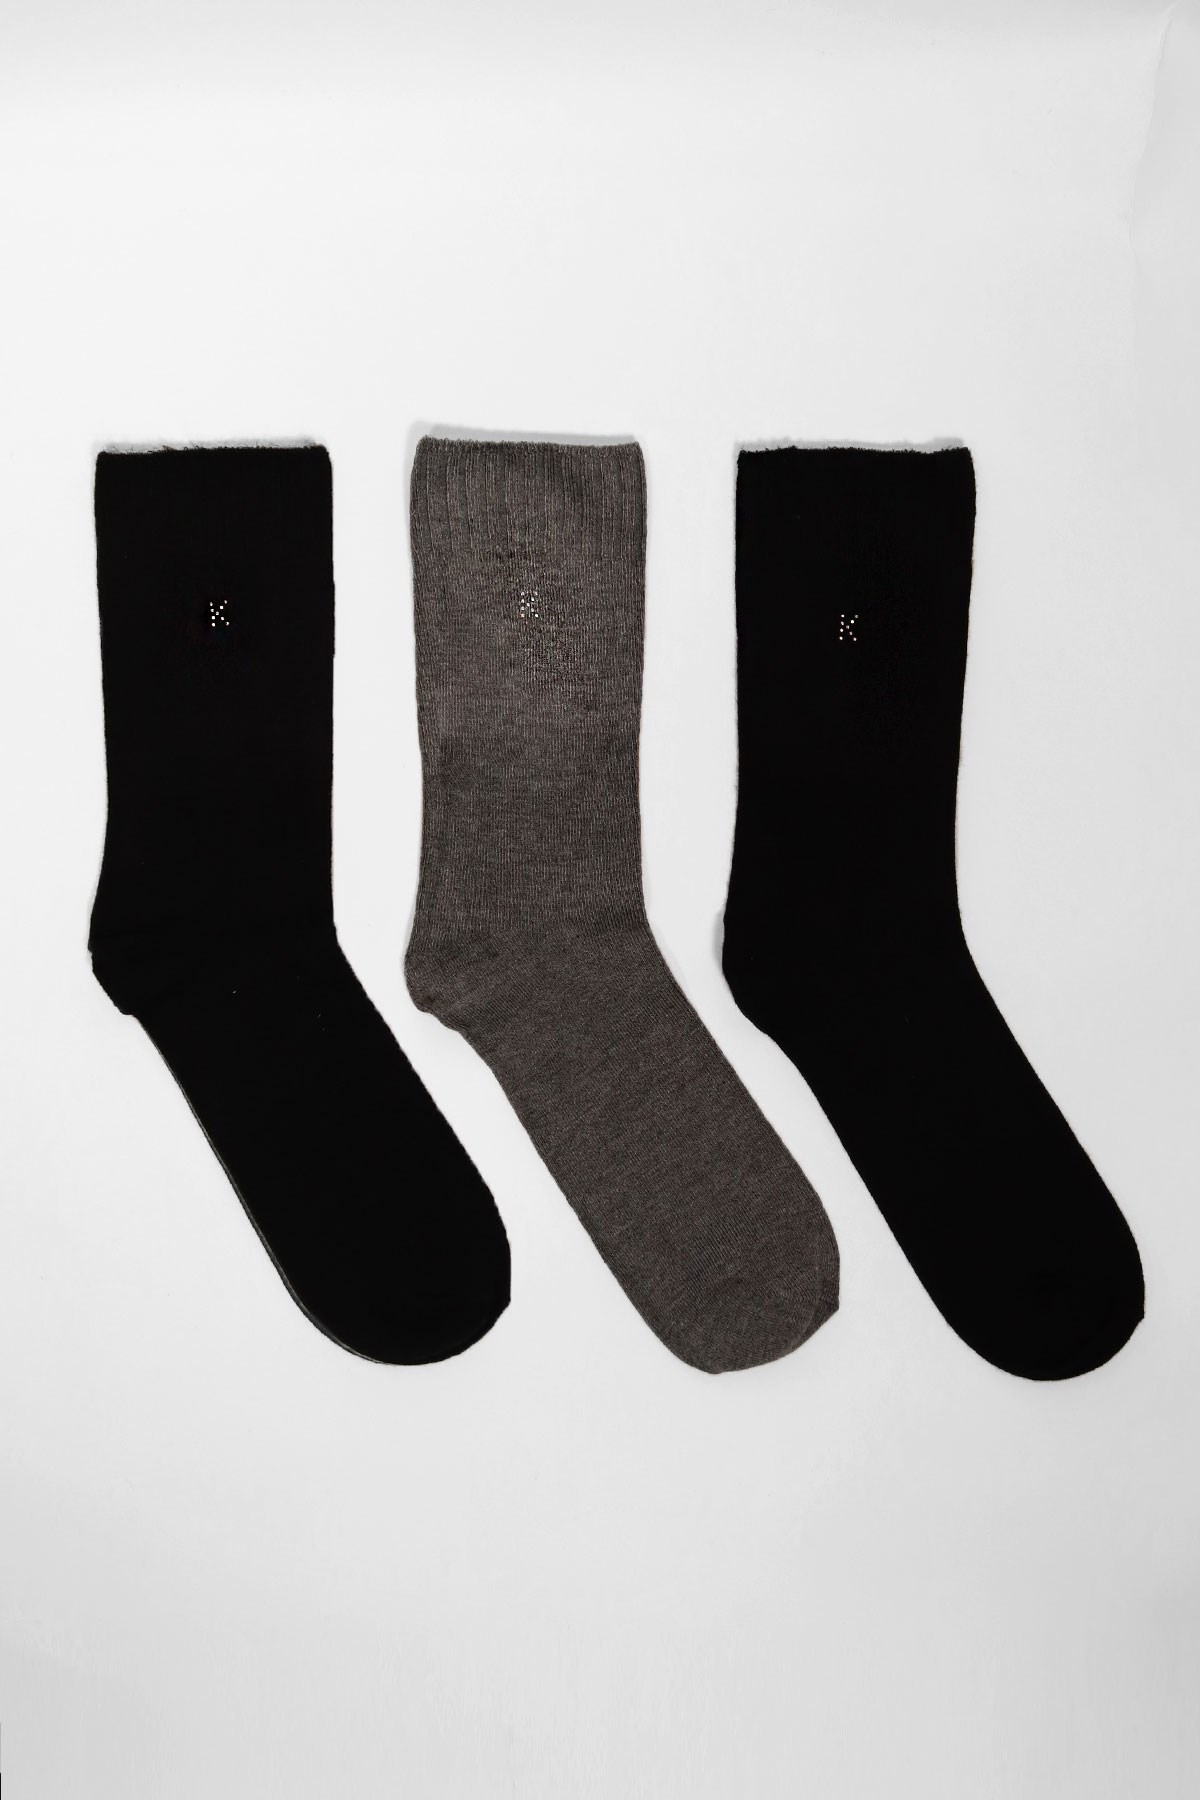 3'lü Paket Melissa Modal Kadın Çorap BLACK-ANTRACITE-BLACK